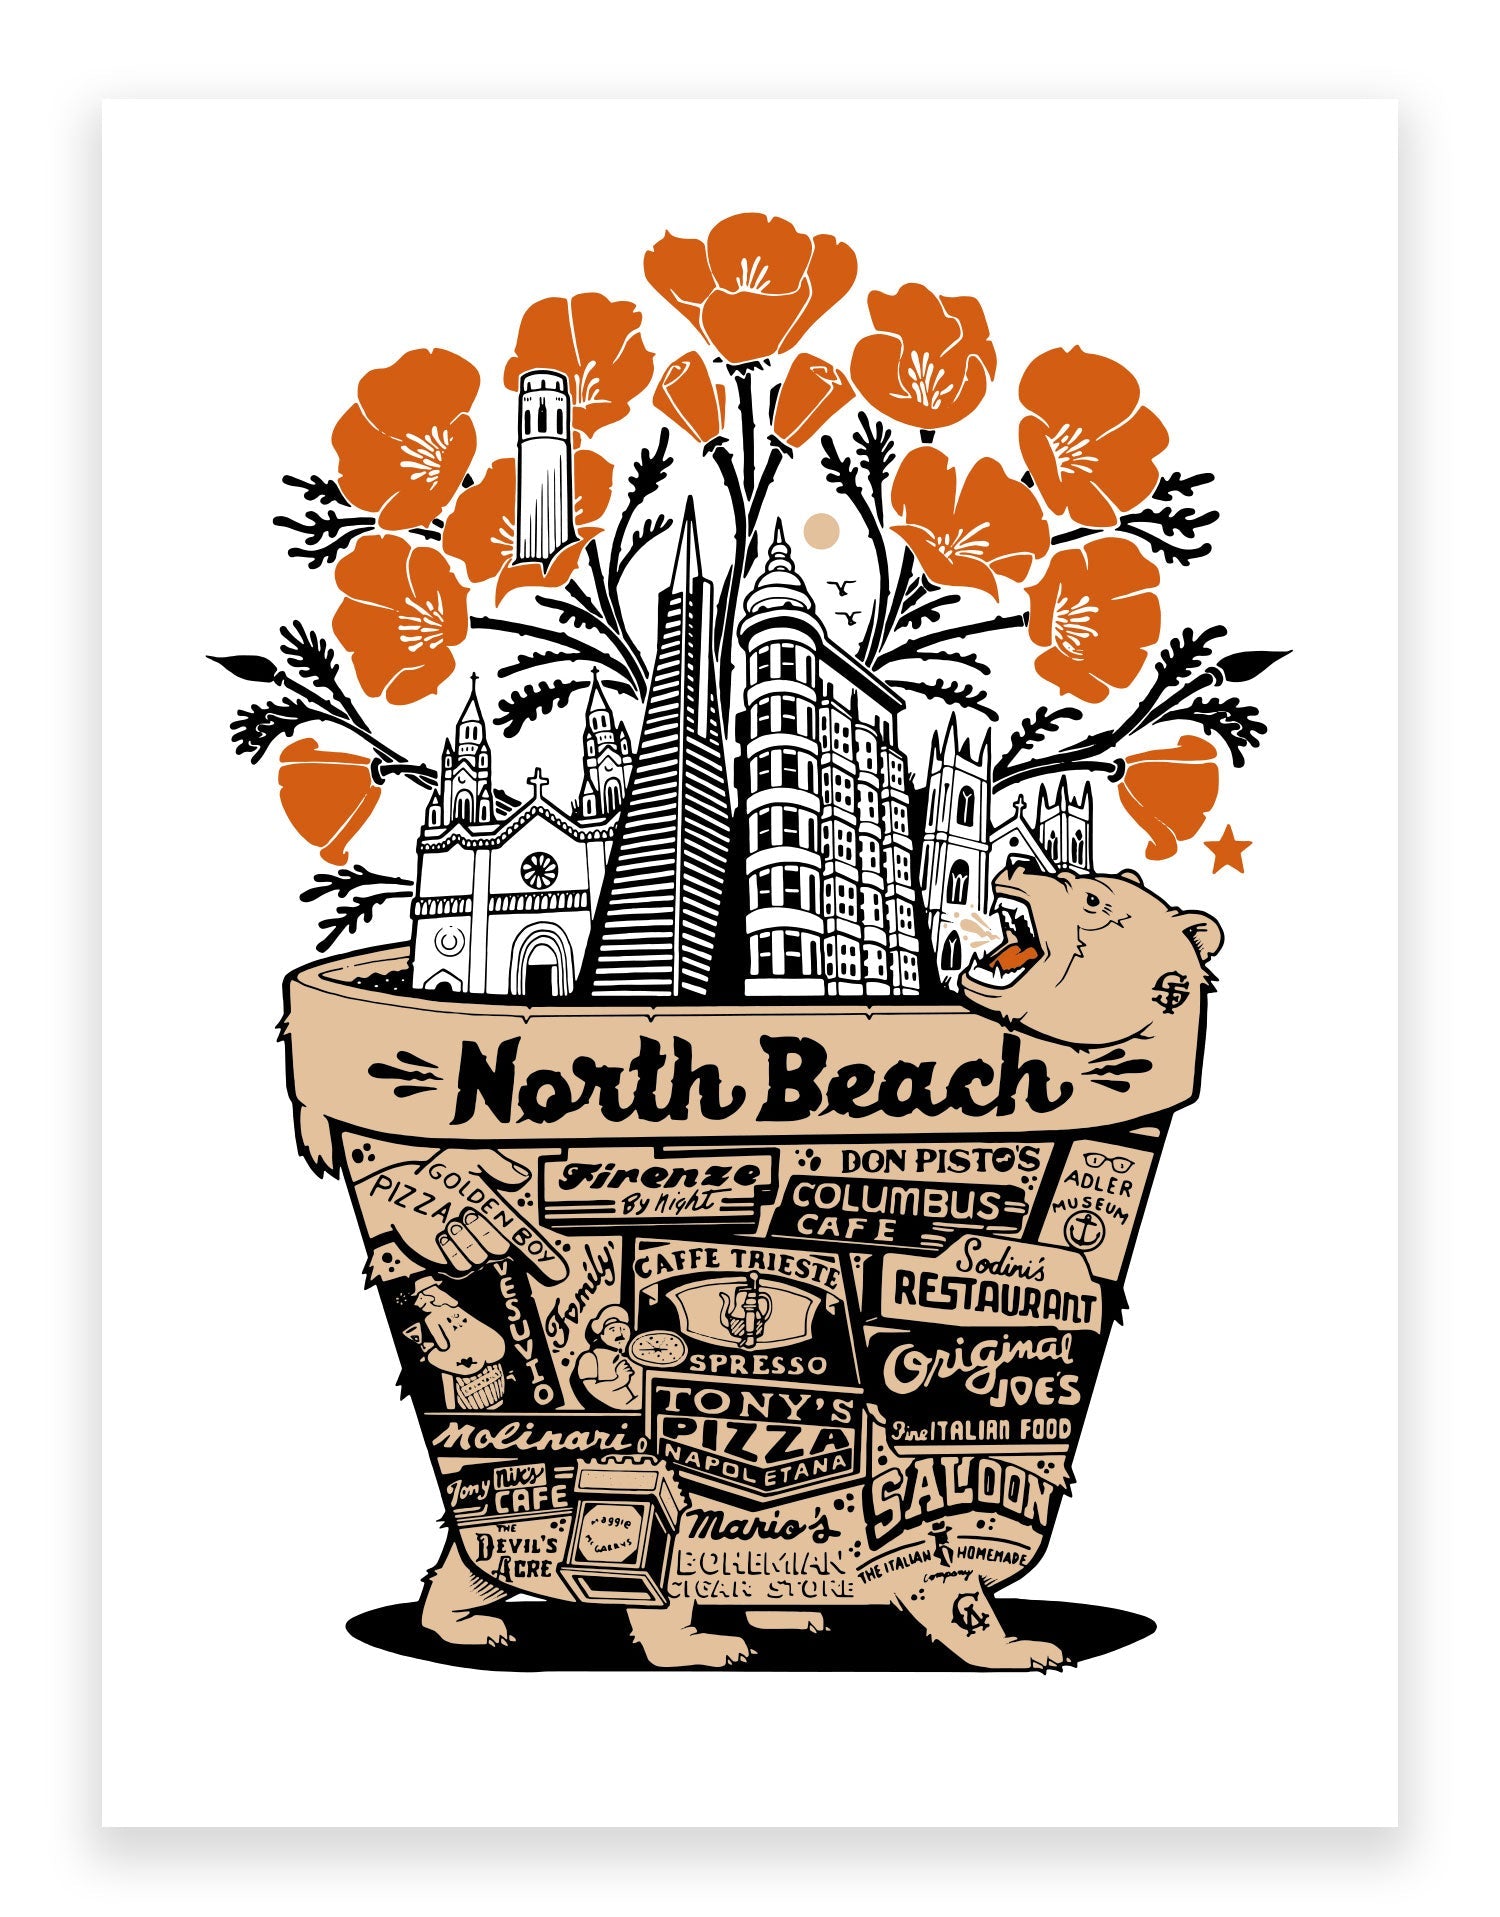  by Jeremy Fish titled Jeremy Fish - "North Beach" Print